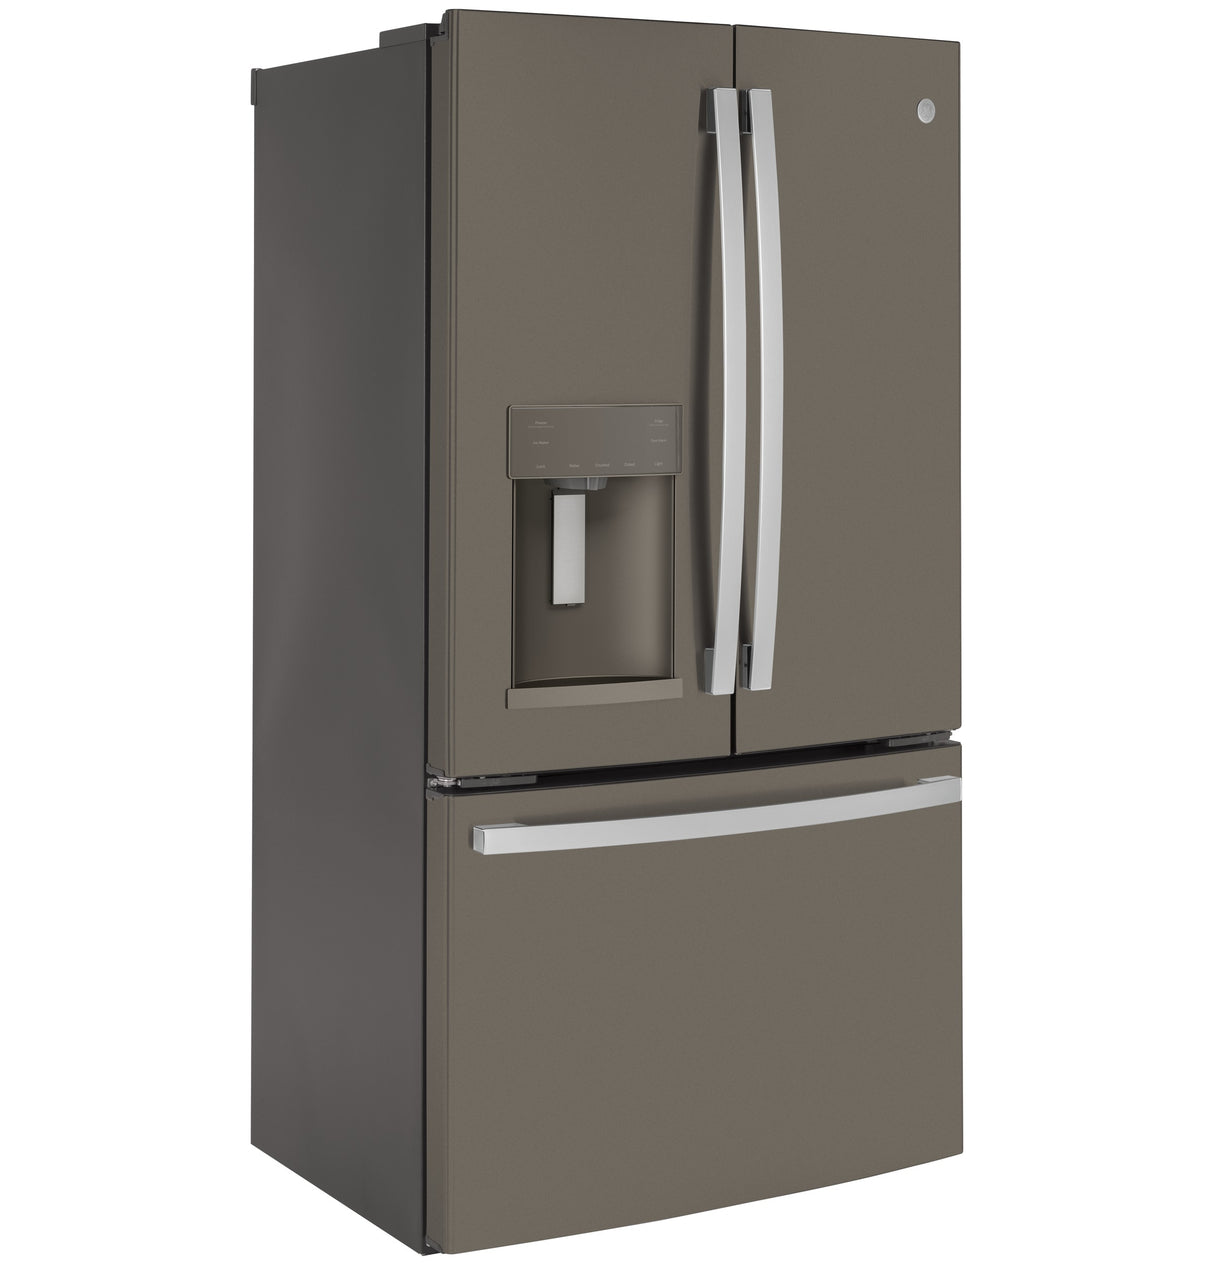 GE(R) ENERGY STAR(R) 22.1 Cu. Ft. Counter-Depth French-Door Refrigerator - (GYE22GMNES)